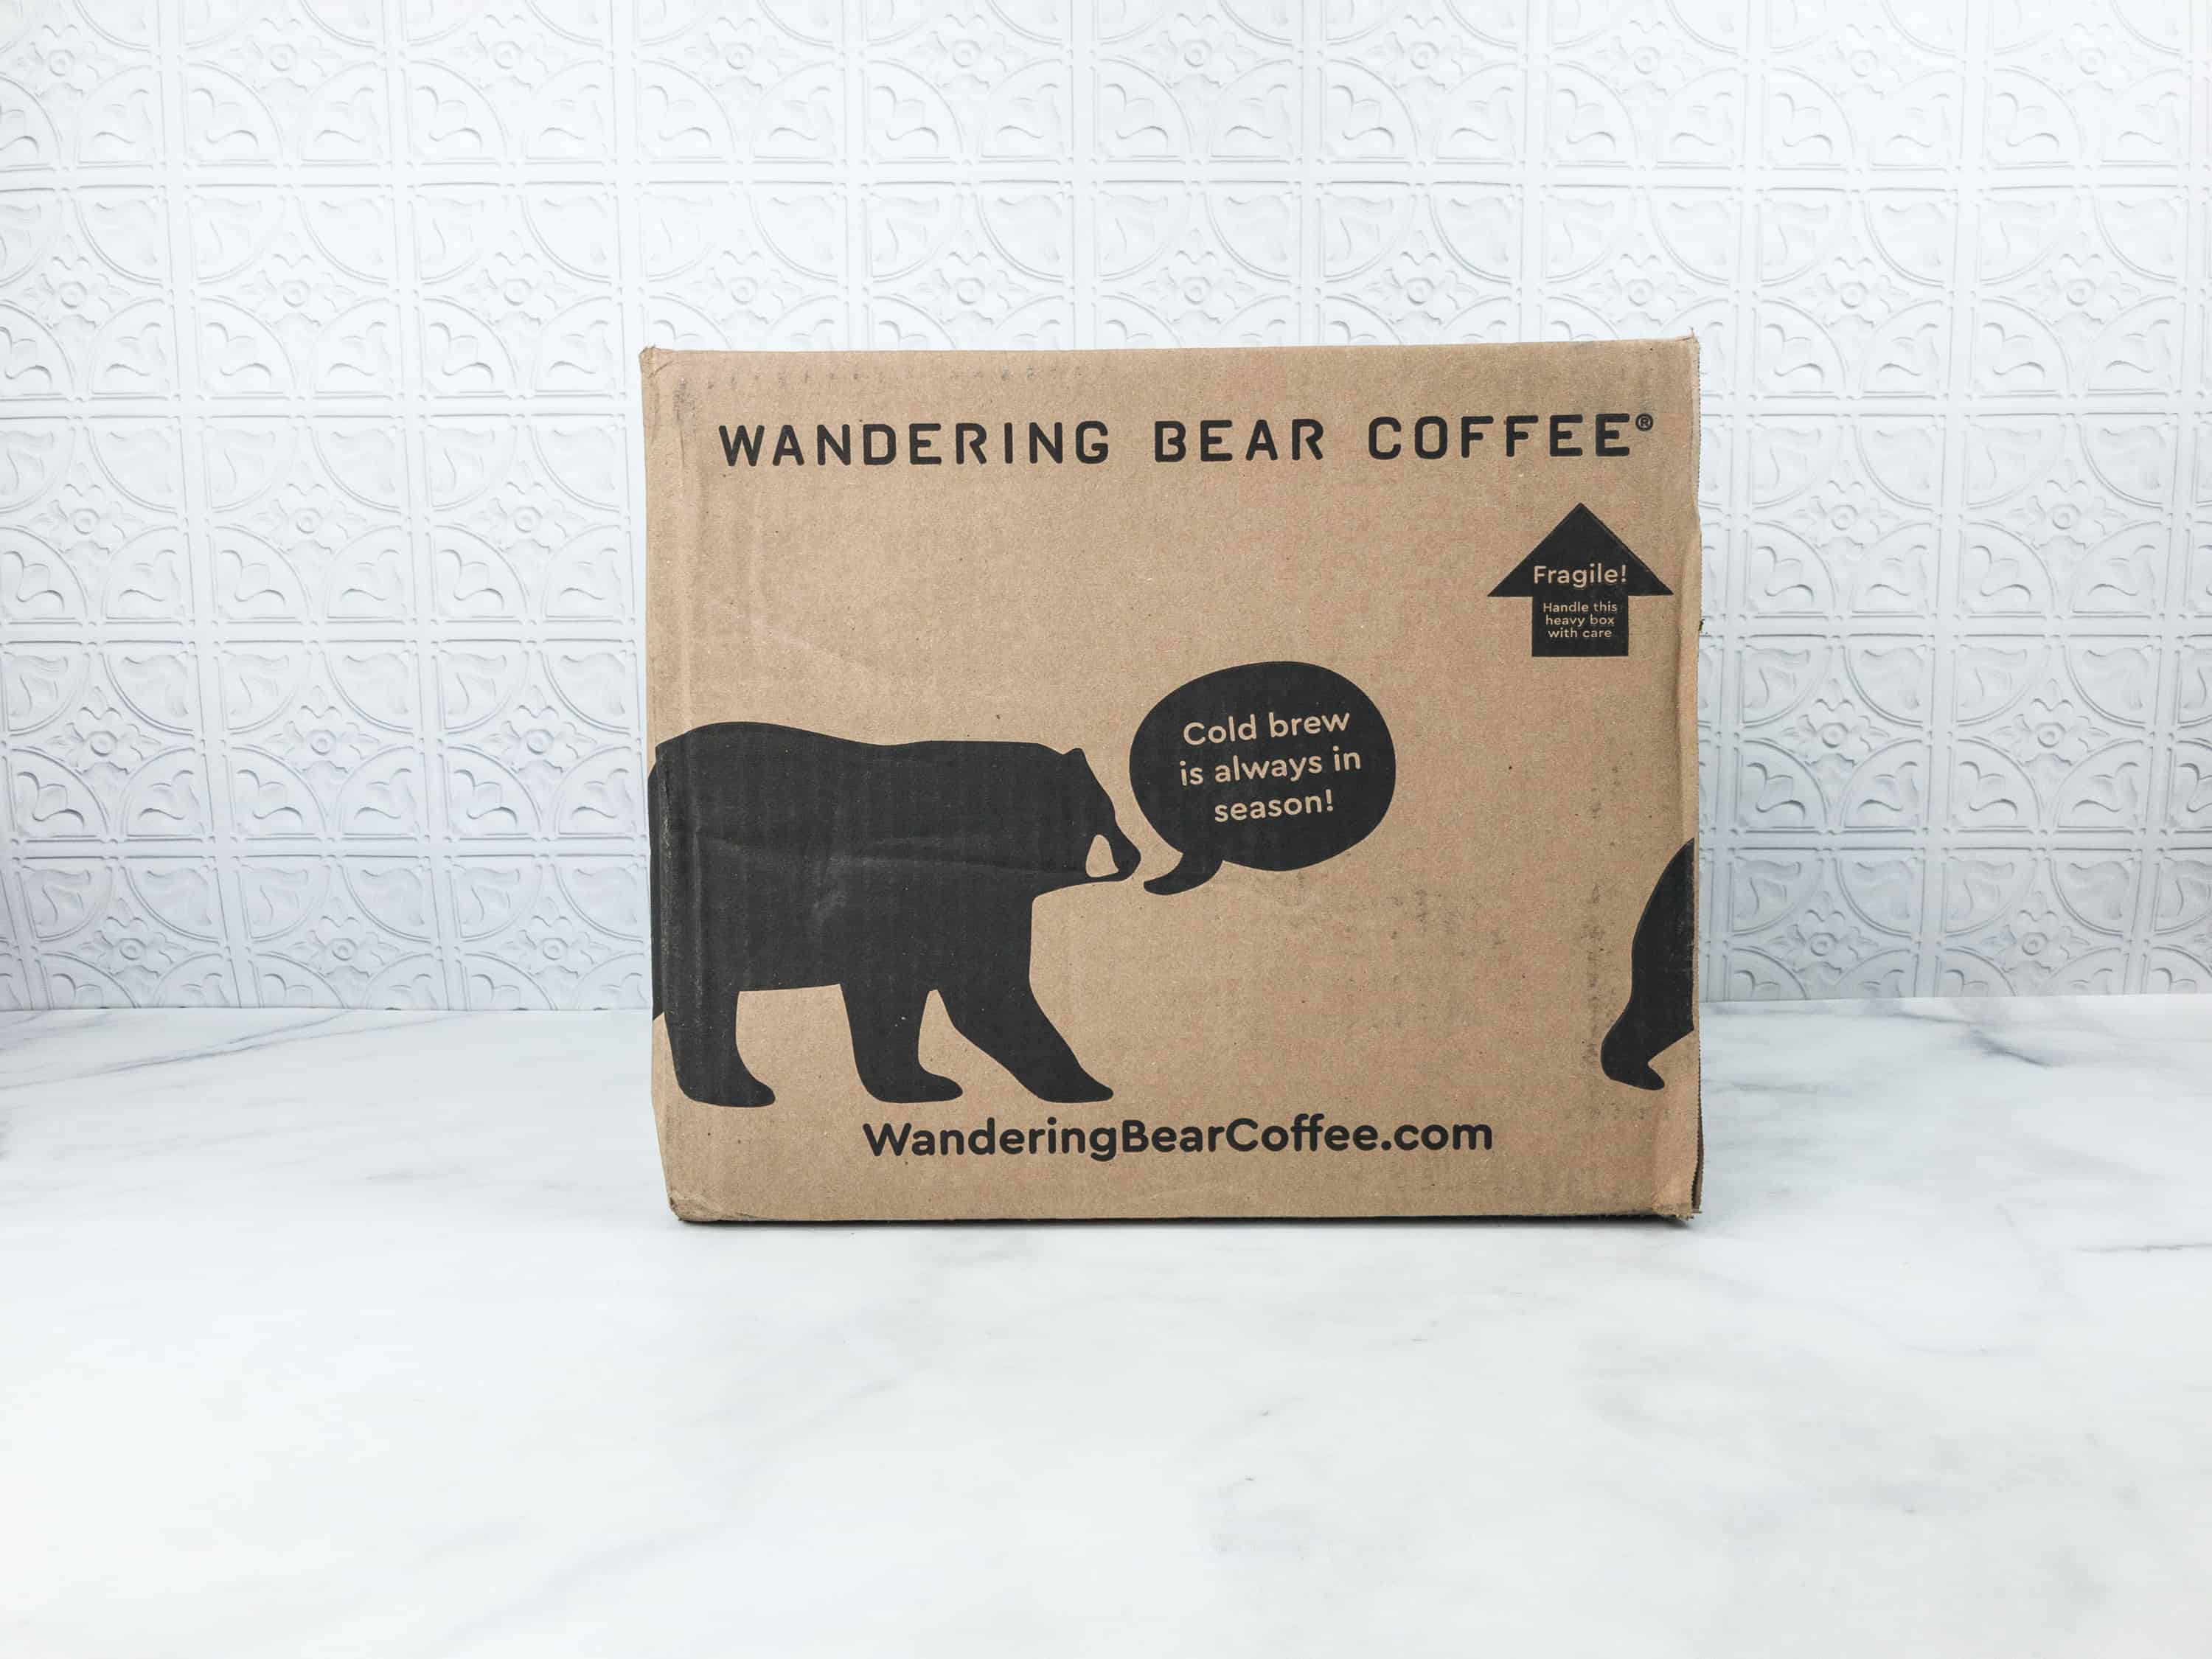 wandering bear coffee affiliate program